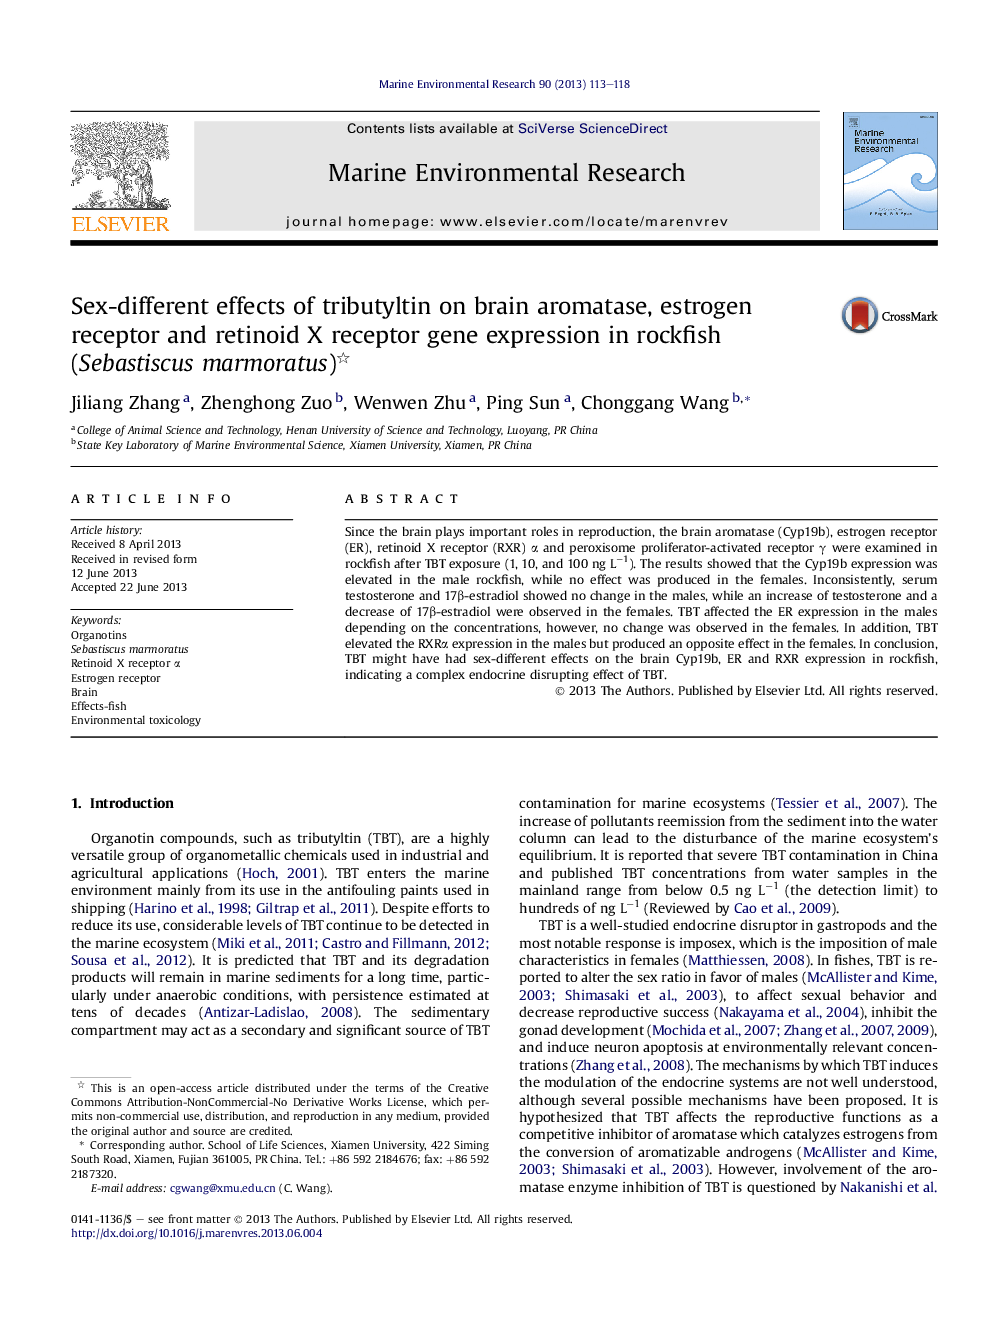 Sex-different effects of tributyltin on brain aromatase, estrogen receptor and retinoid X receptor gene expression in rockfish (Sebastiscus marmoratus)